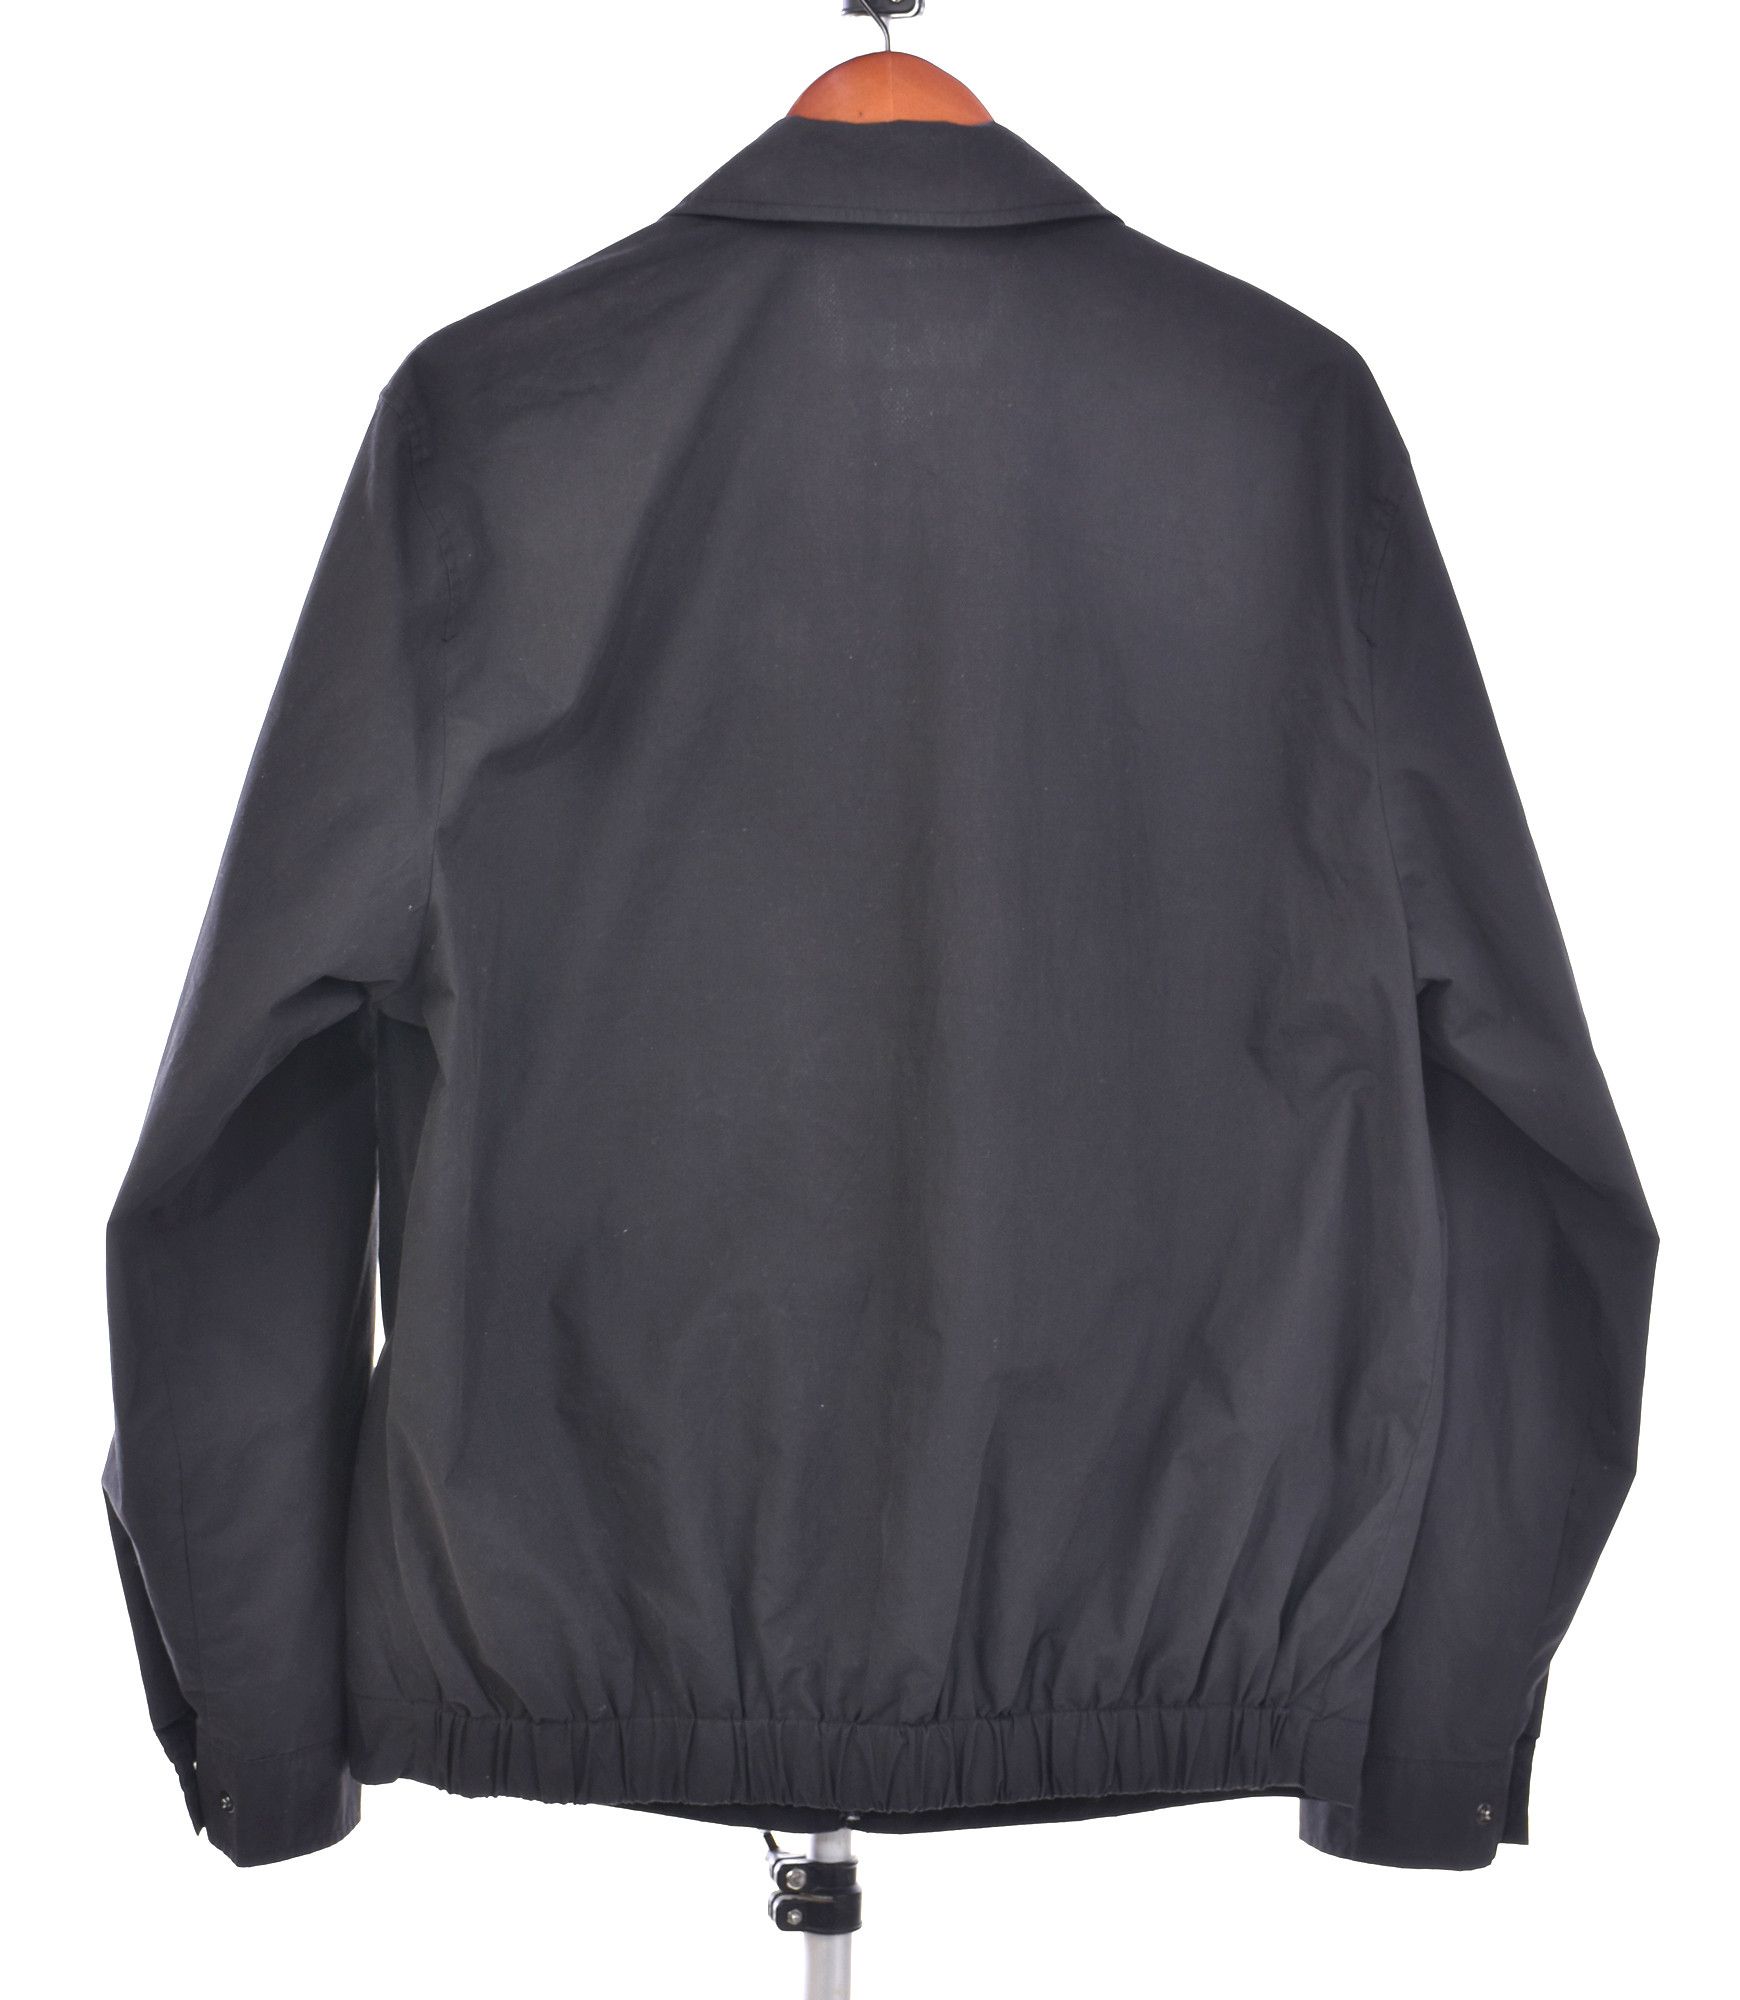 Yves Saint Laurent vintage black harrington jacket Size US L / EU 52-54 / 3 - 3 Thumbnail